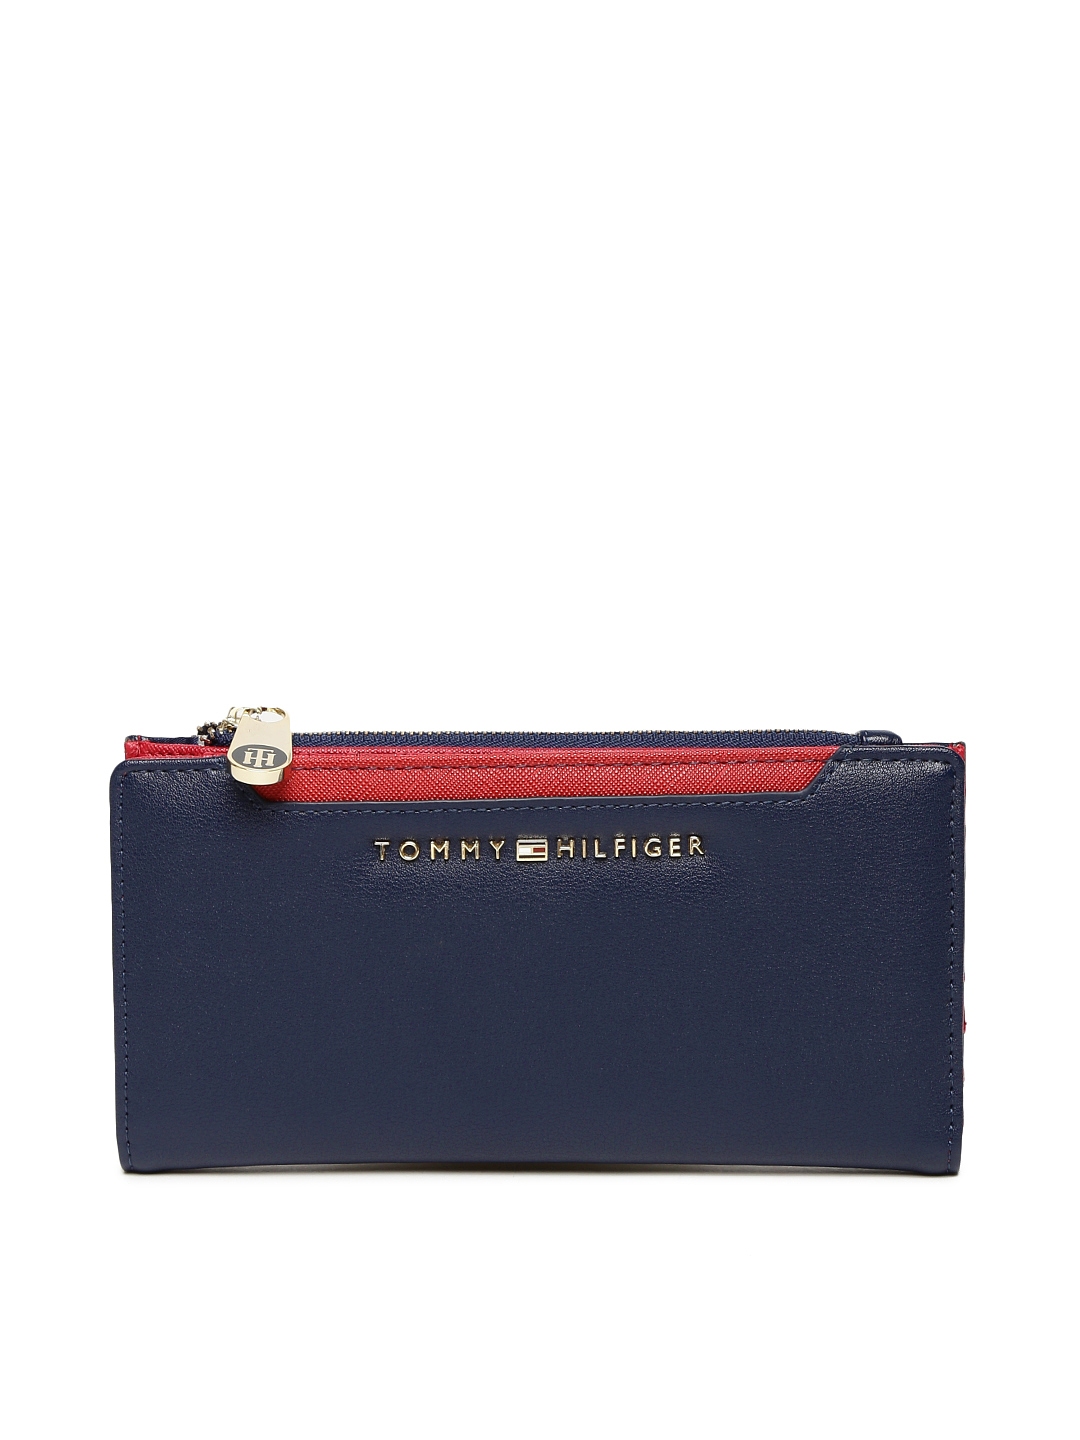 Buy Tommy Hilfiger Women Navy Blue Solid Two Fold Wallet - Wallets for Women 2423507 | Myntra